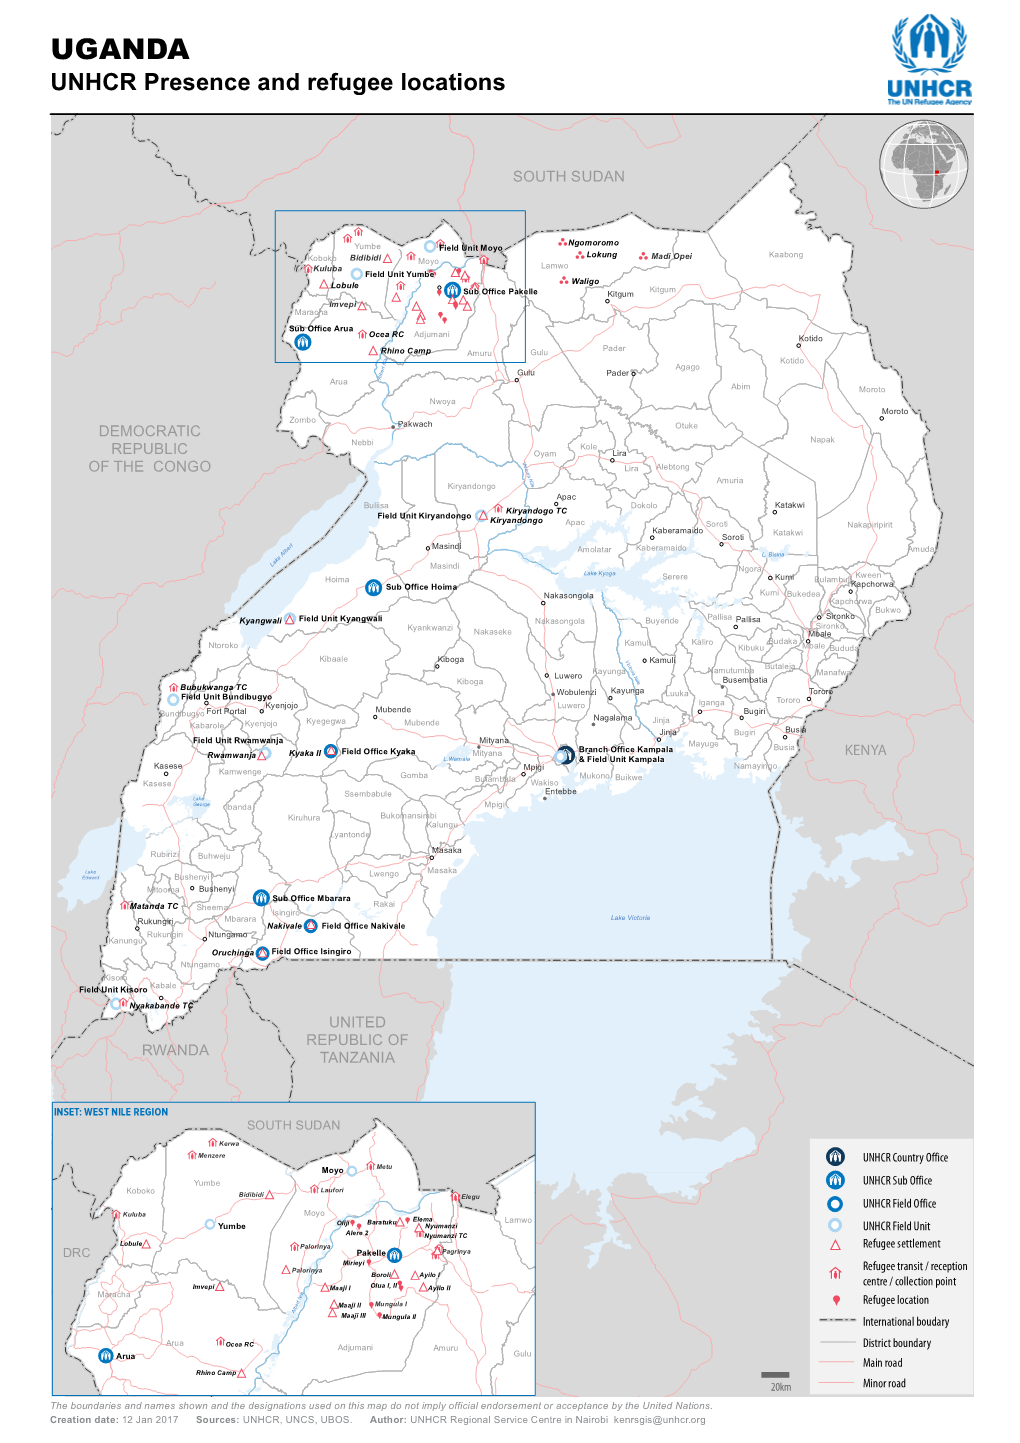 Uganda; UNHCR Presence and Refugee Locations